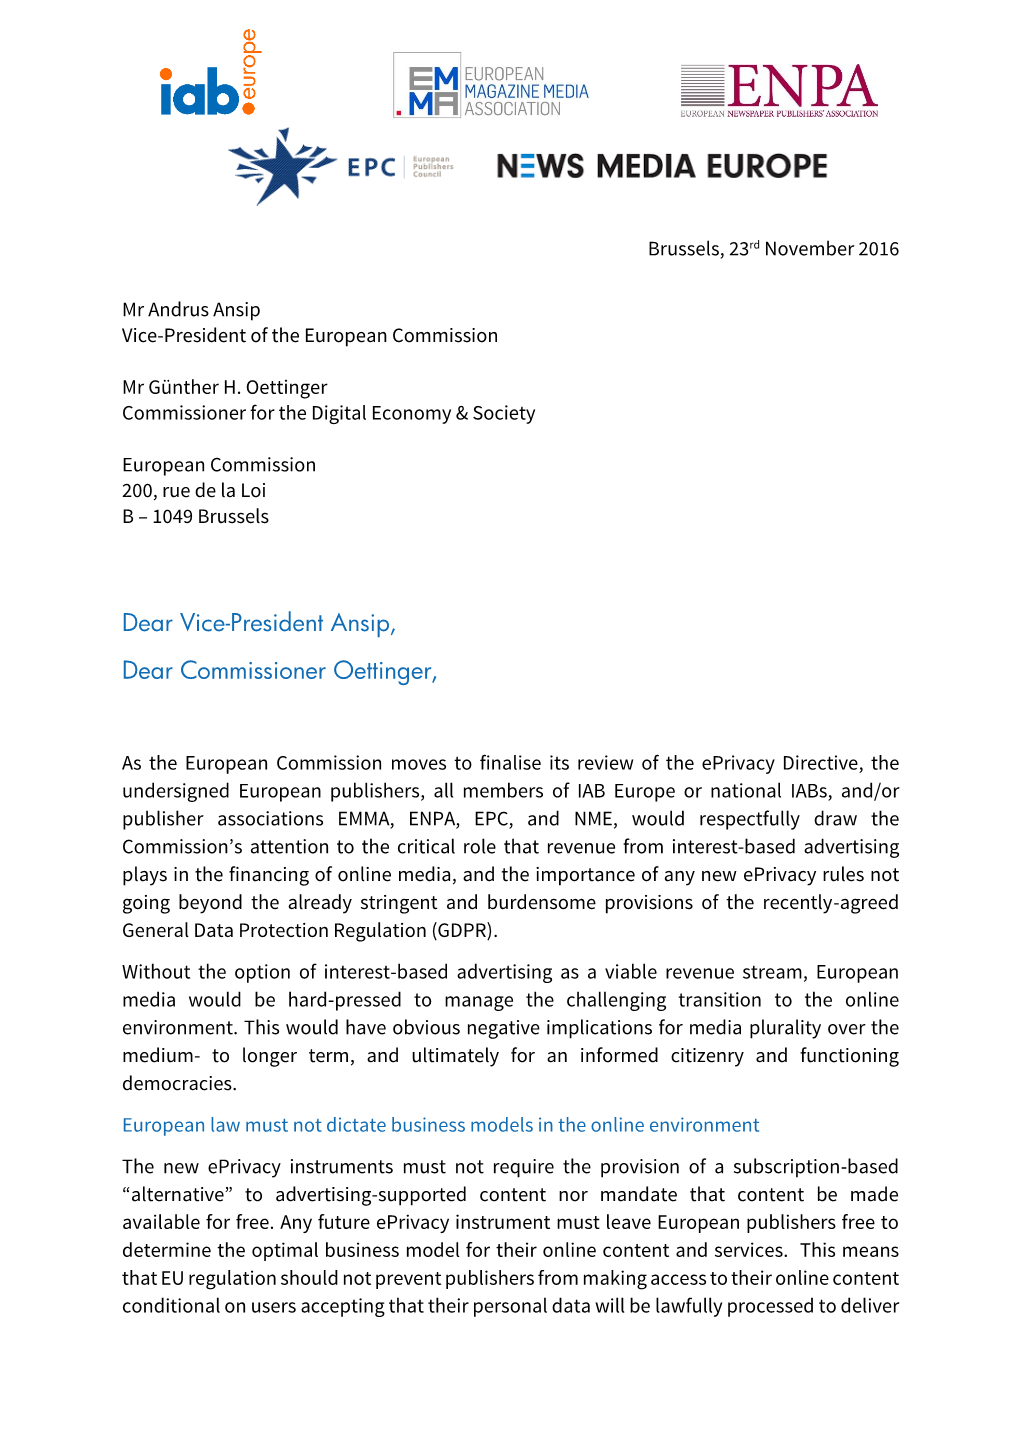 Dear Vice-President Ansip, Dear Commissioner Oettinger